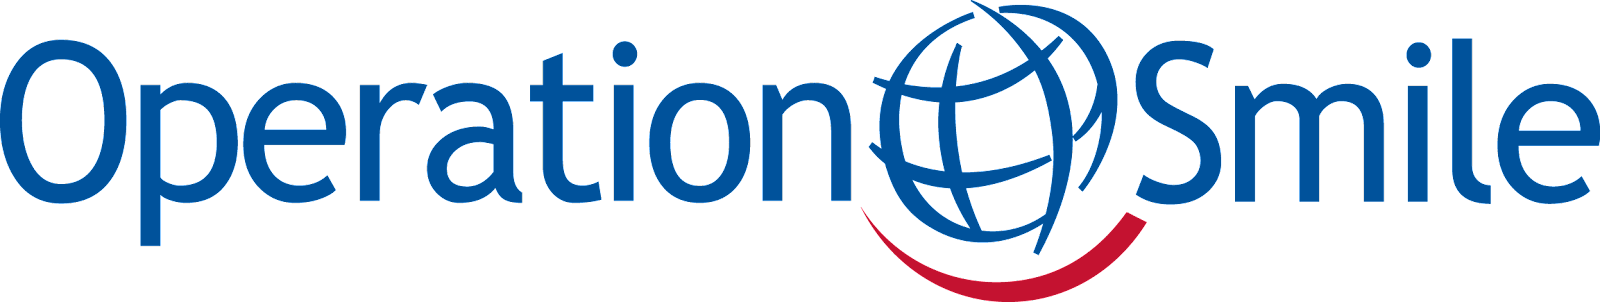 Operation Smile logotyp